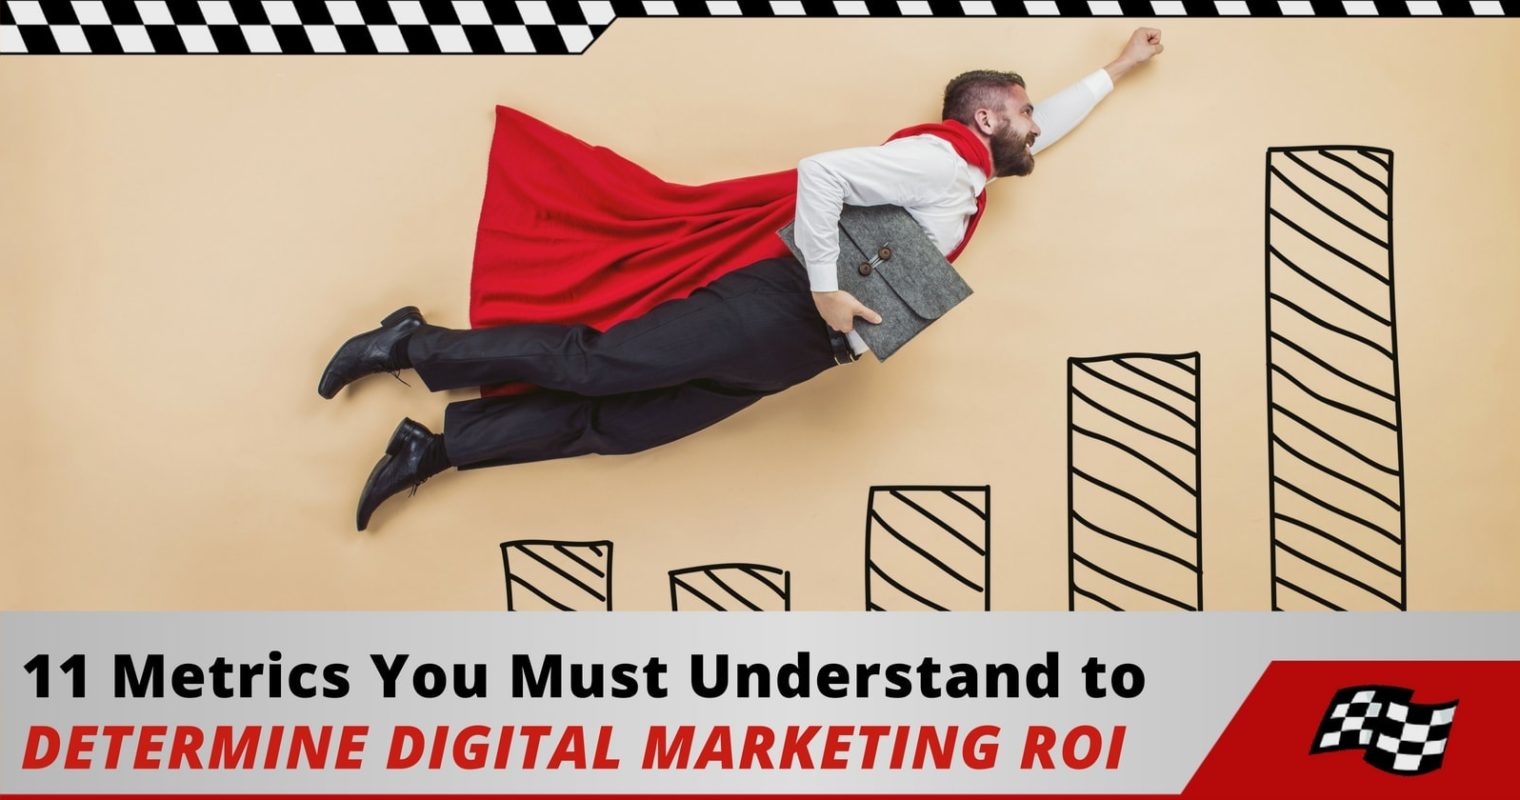 Digital Marketing ROI: 11 Metrics You Must Understand